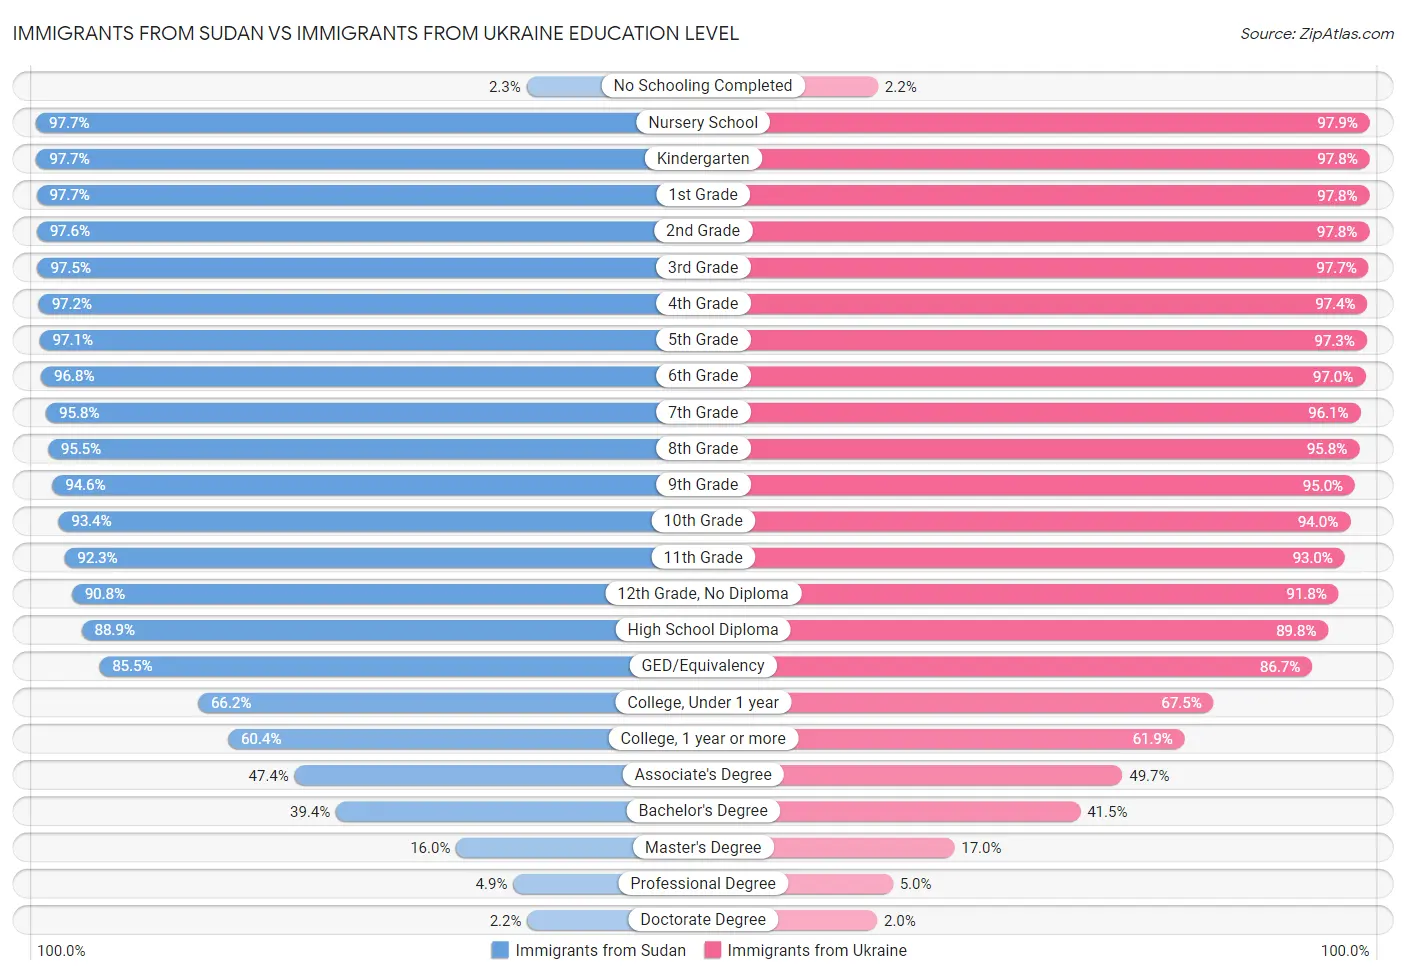 Immigrants from Sudan vs Immigrants from Ukraine Education Level